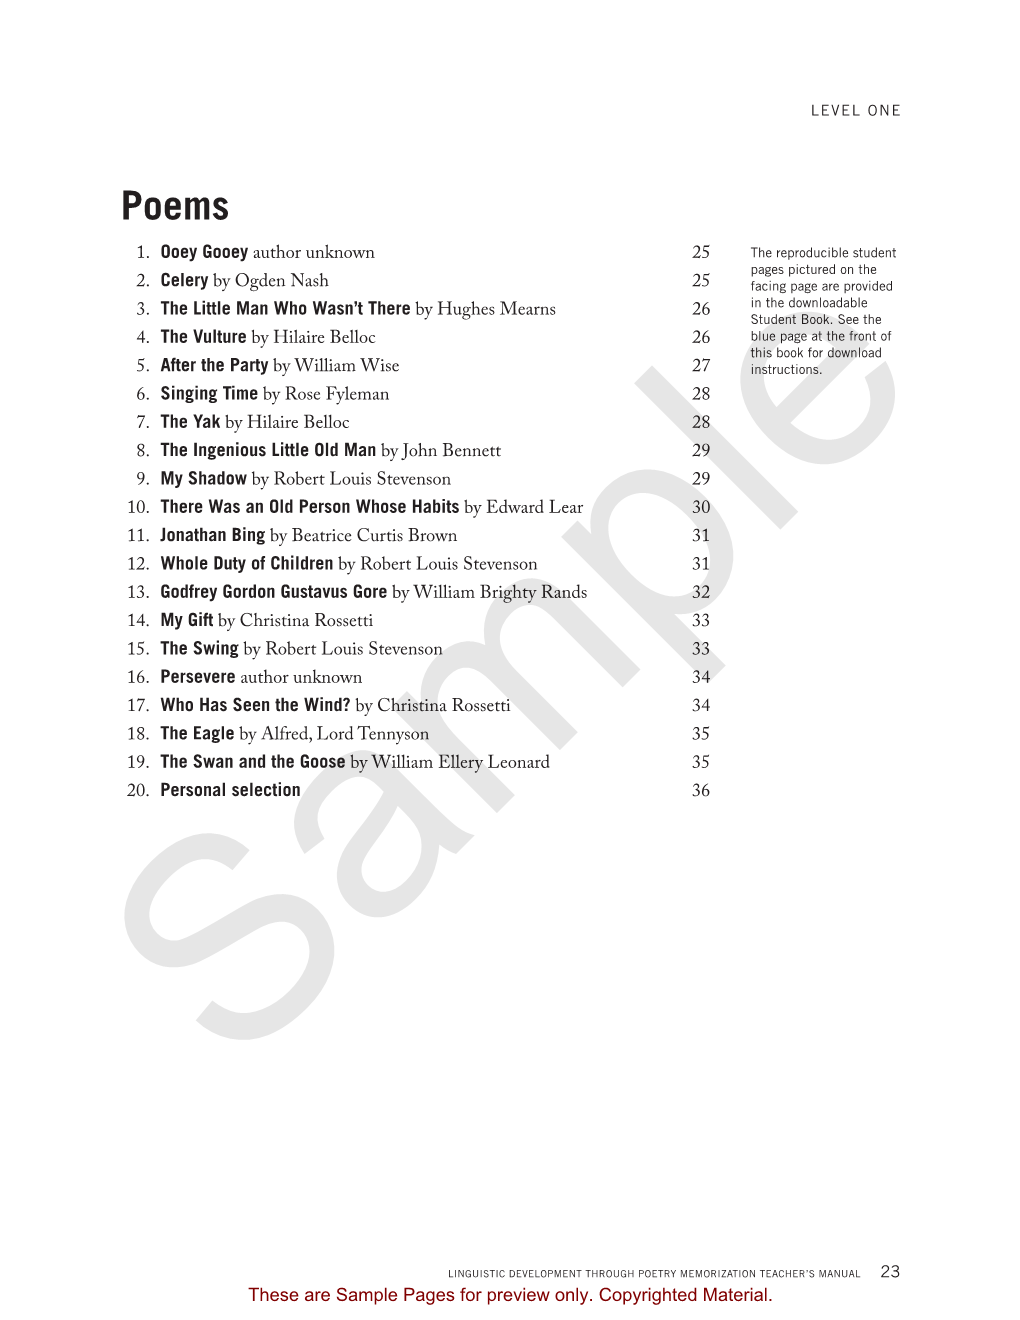 View Poem/Speech List